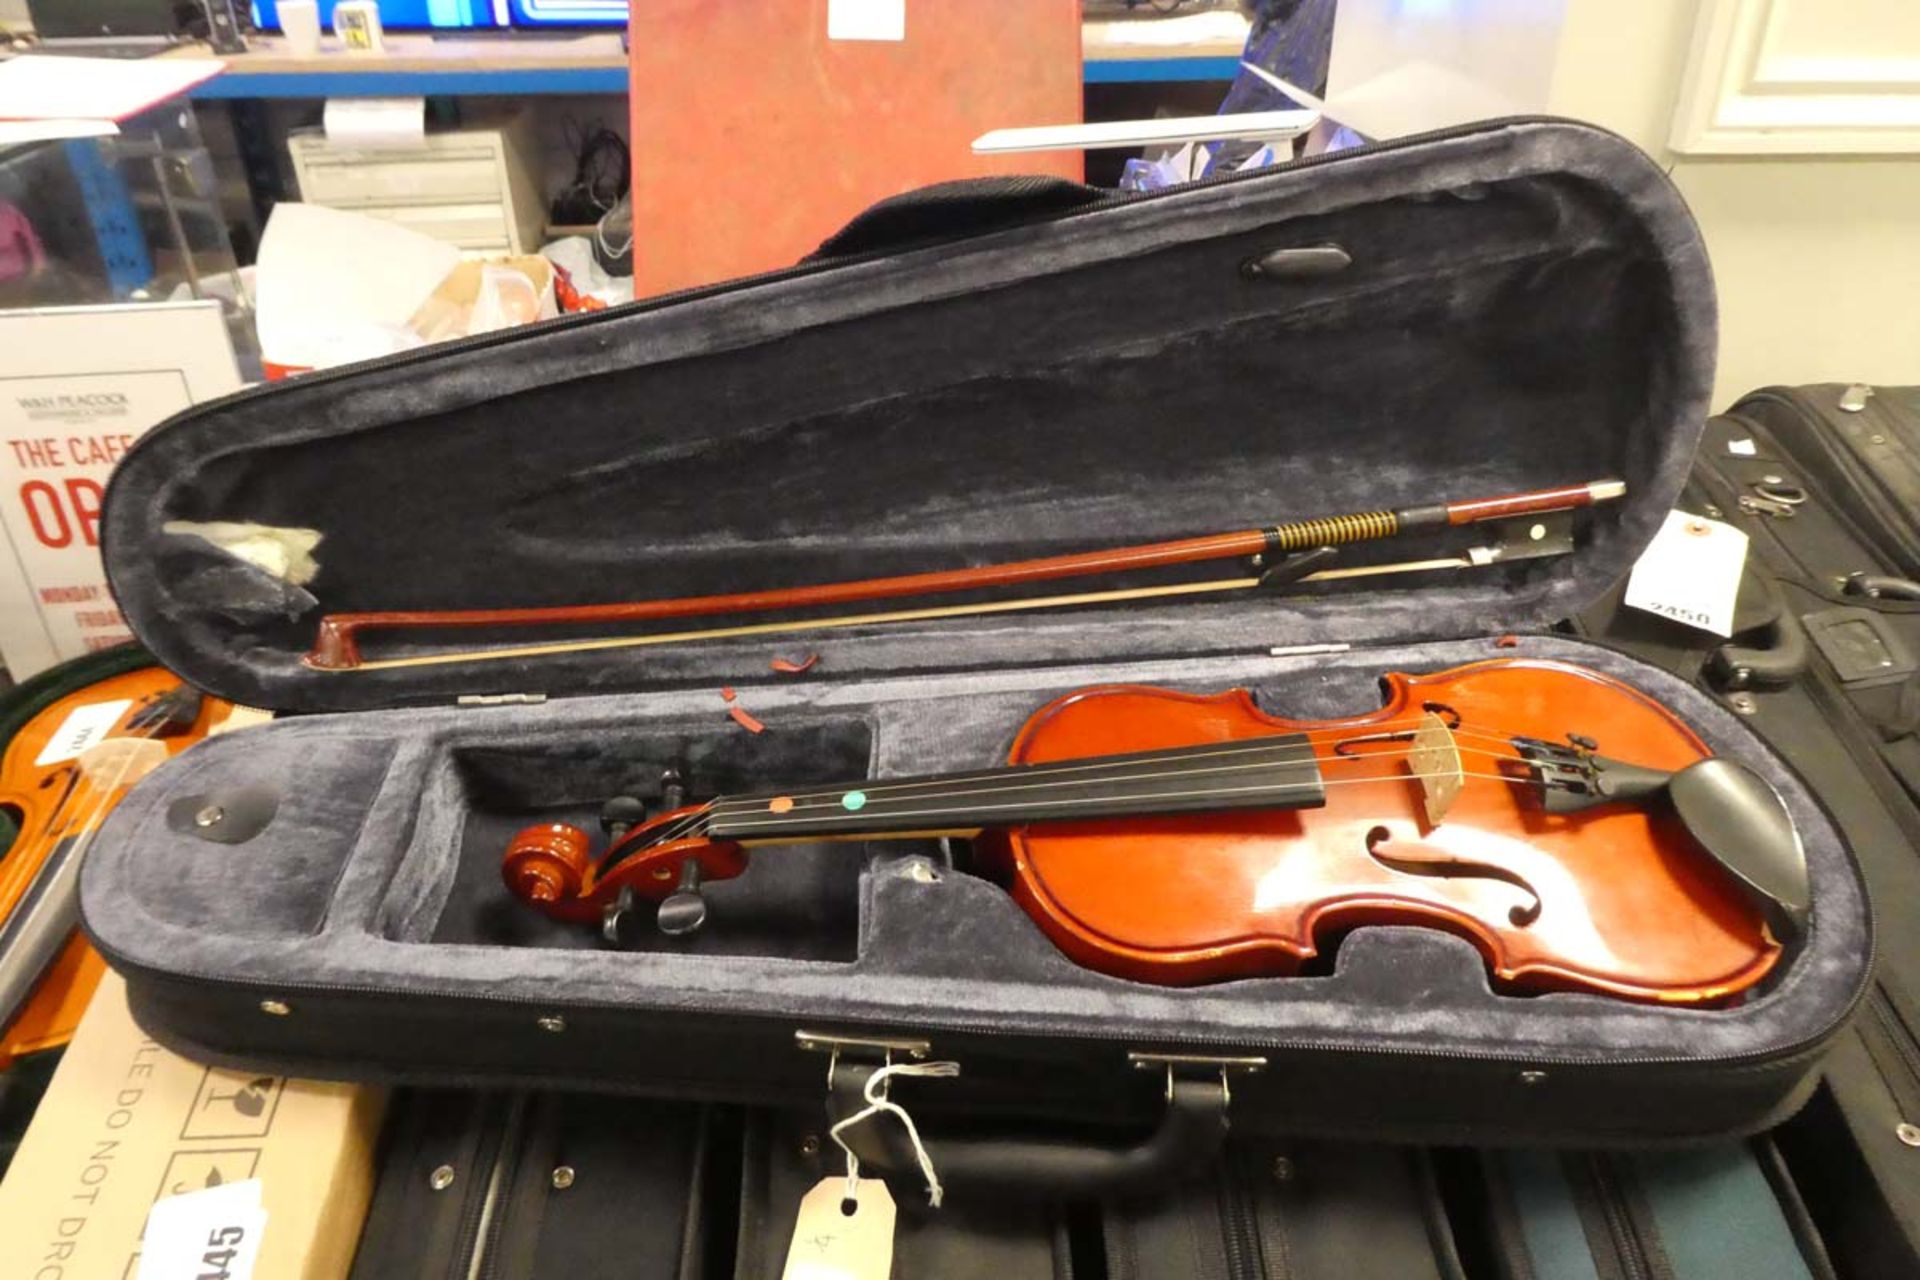 Quarter size violin with case